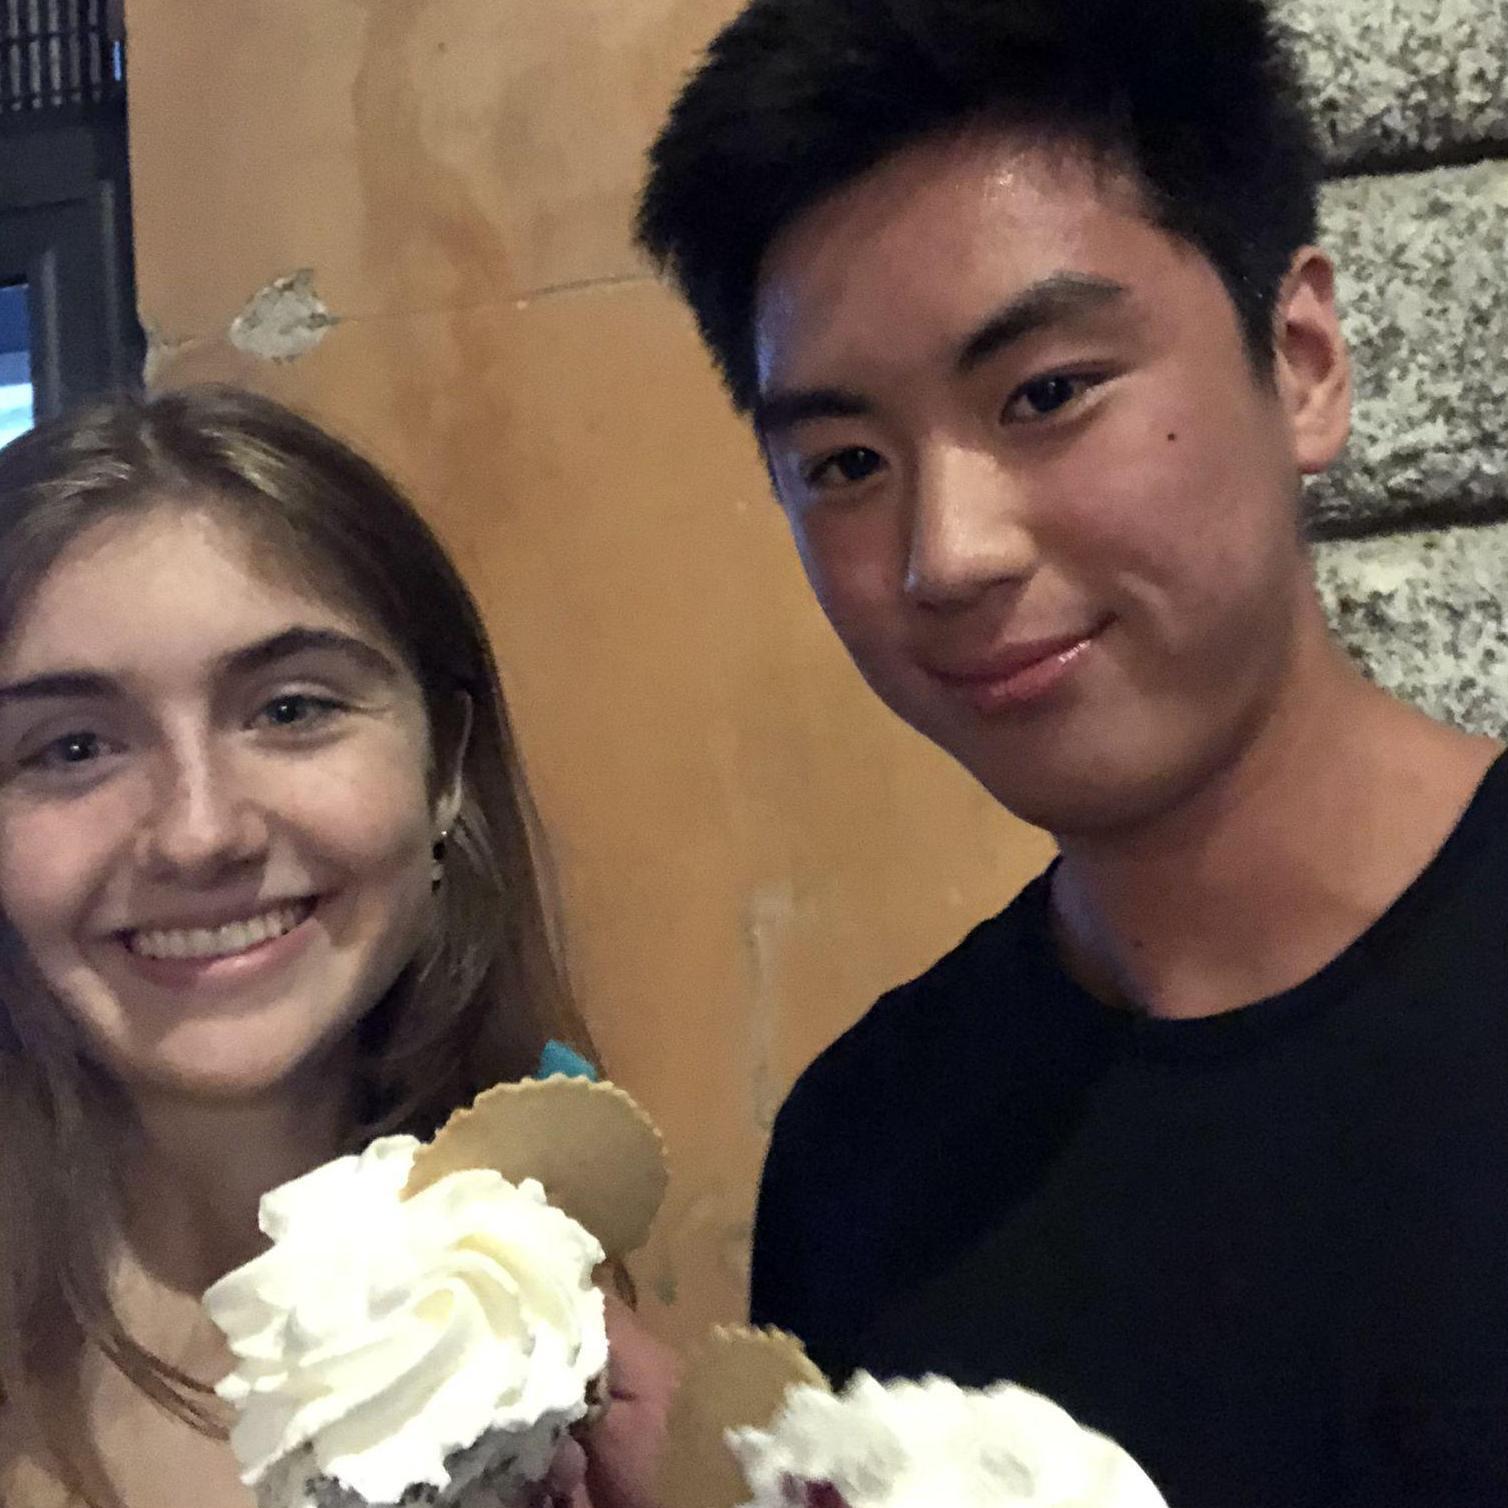 Eating gelato in Rome